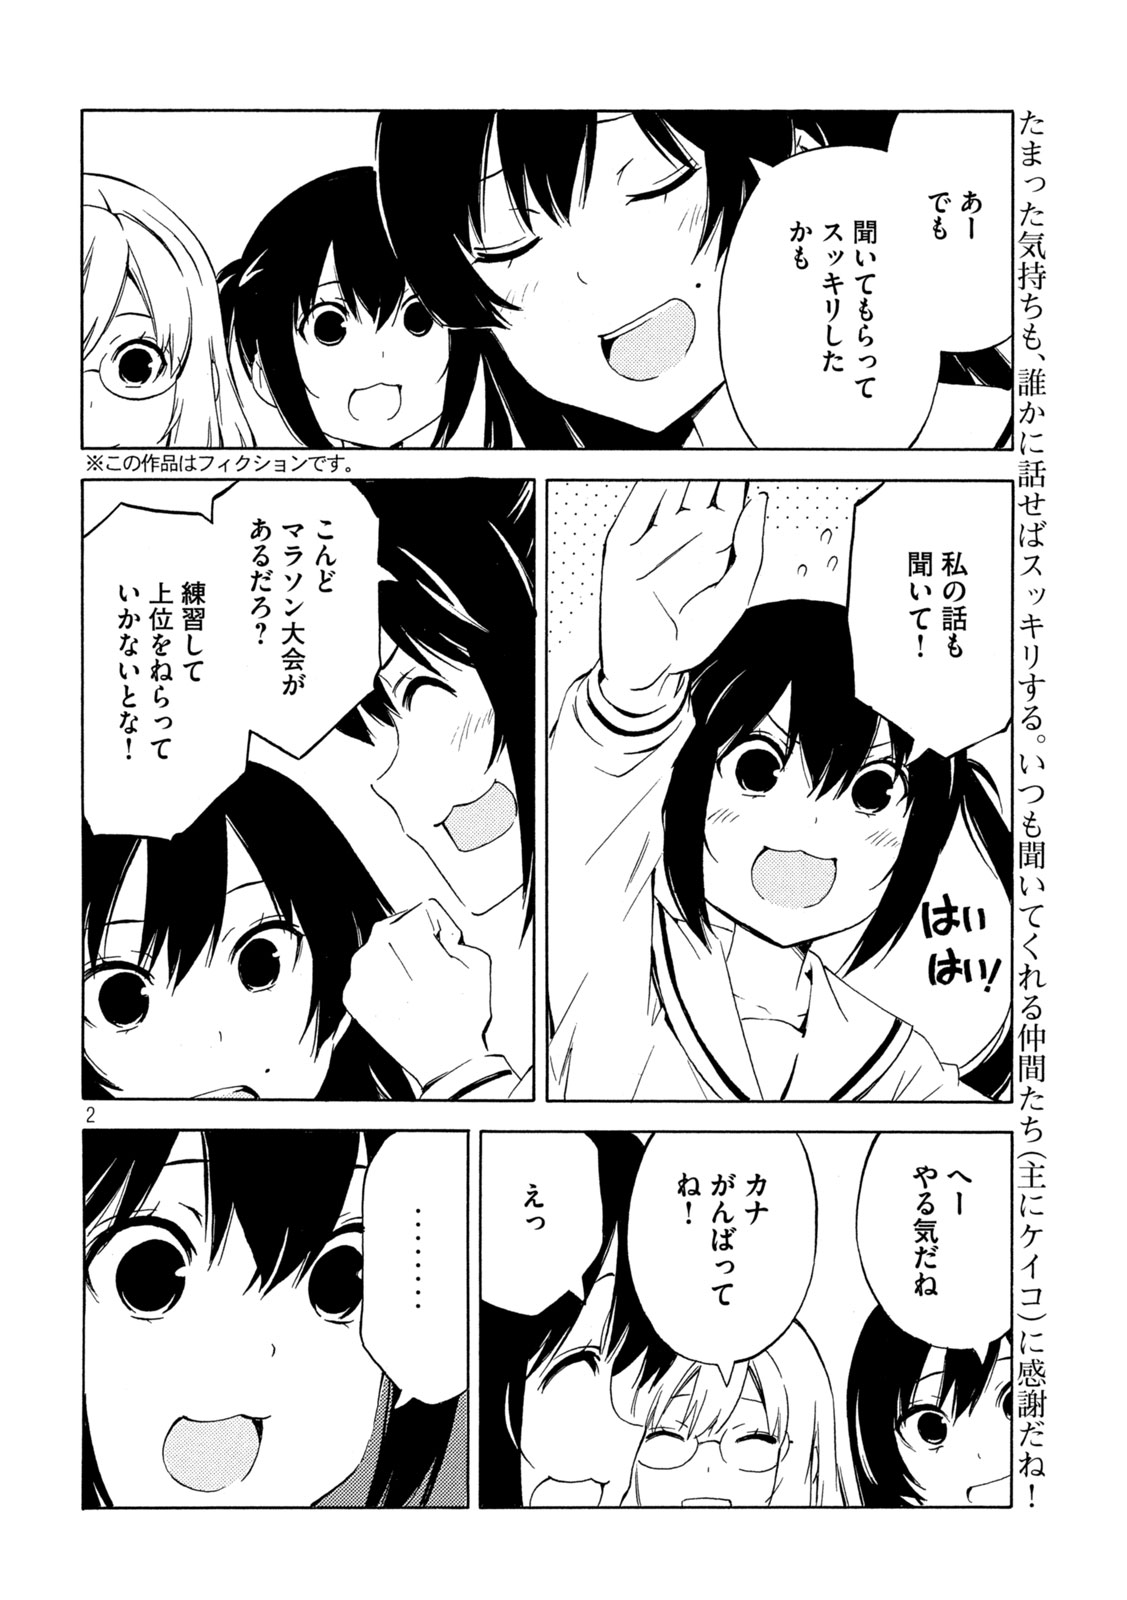 Minami-ke - Chapter 480 - Page 2